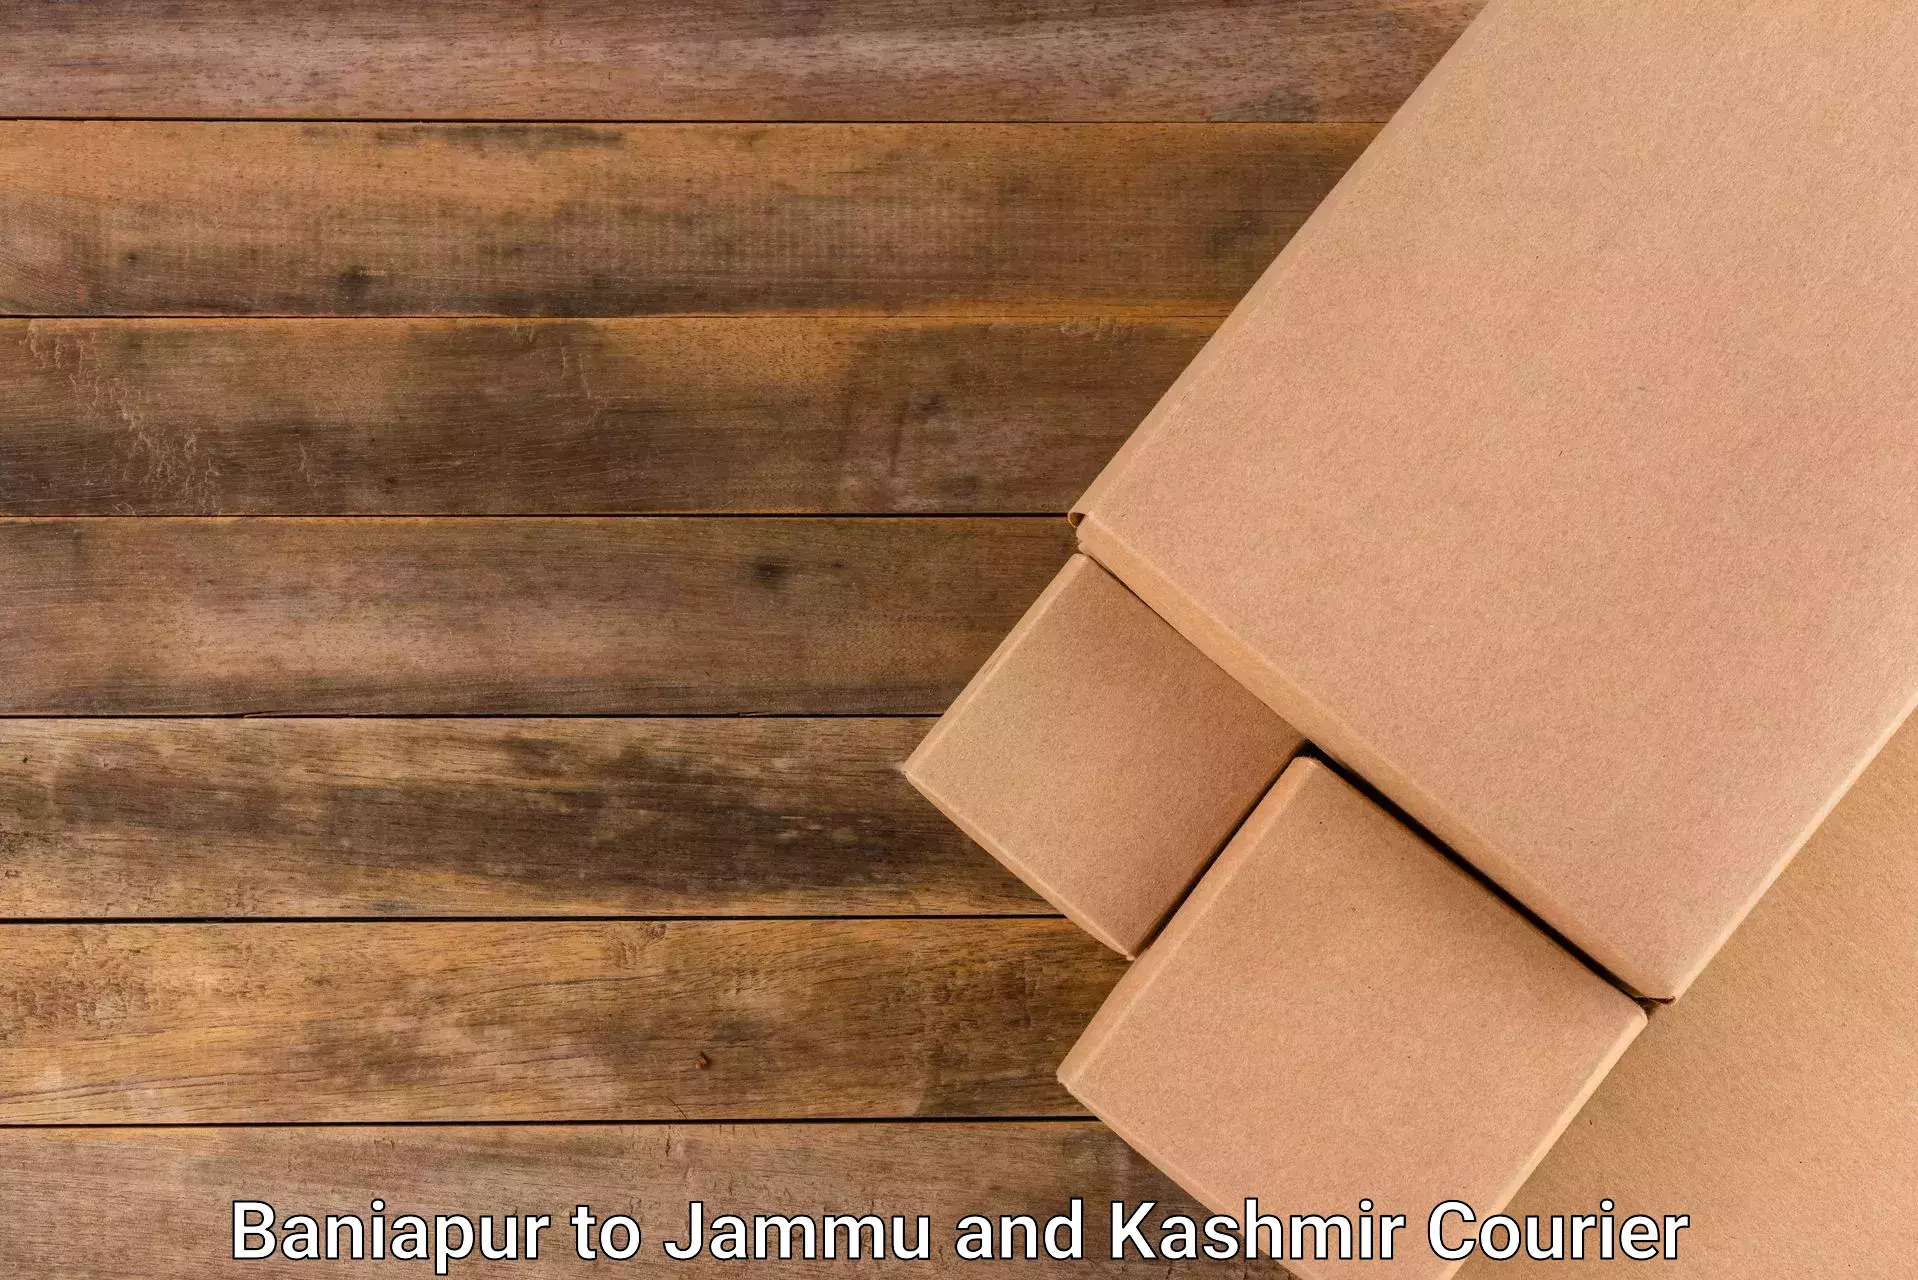 Express mail solutions Baniapur to Jammu and Kashmir